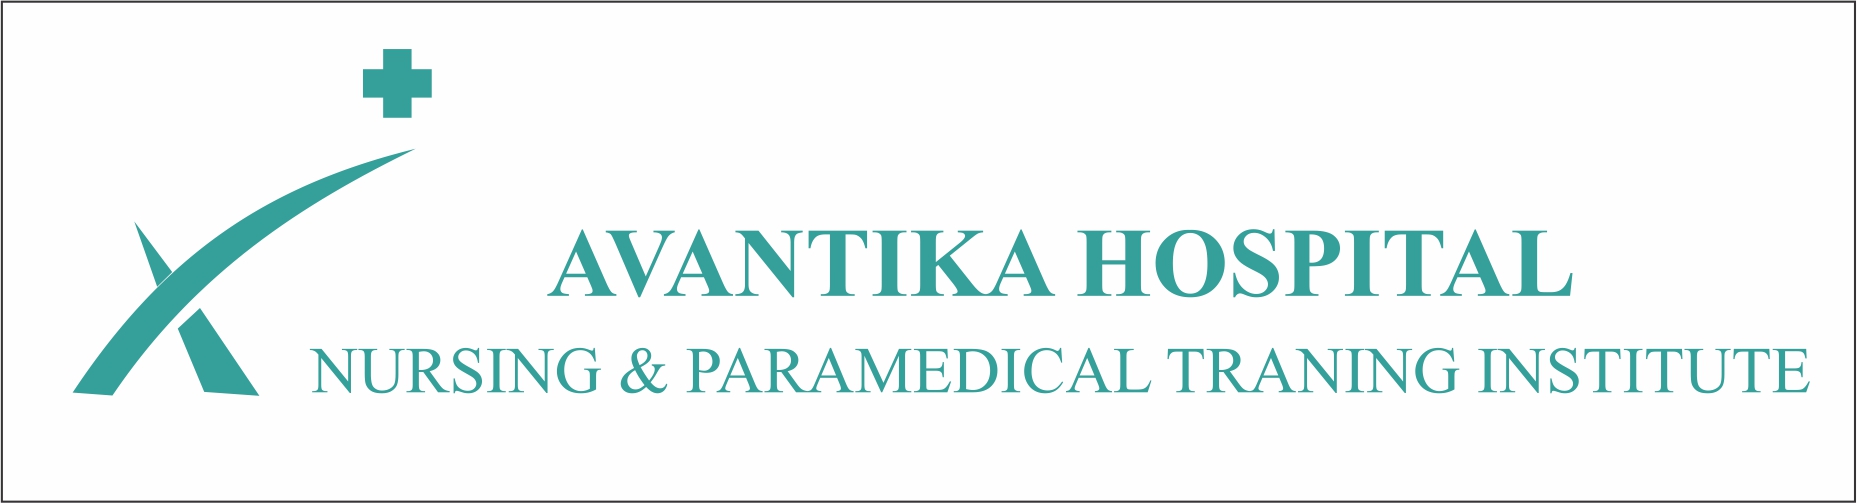 Avantika Multispeciality Hospital|Dentists|Medical Services